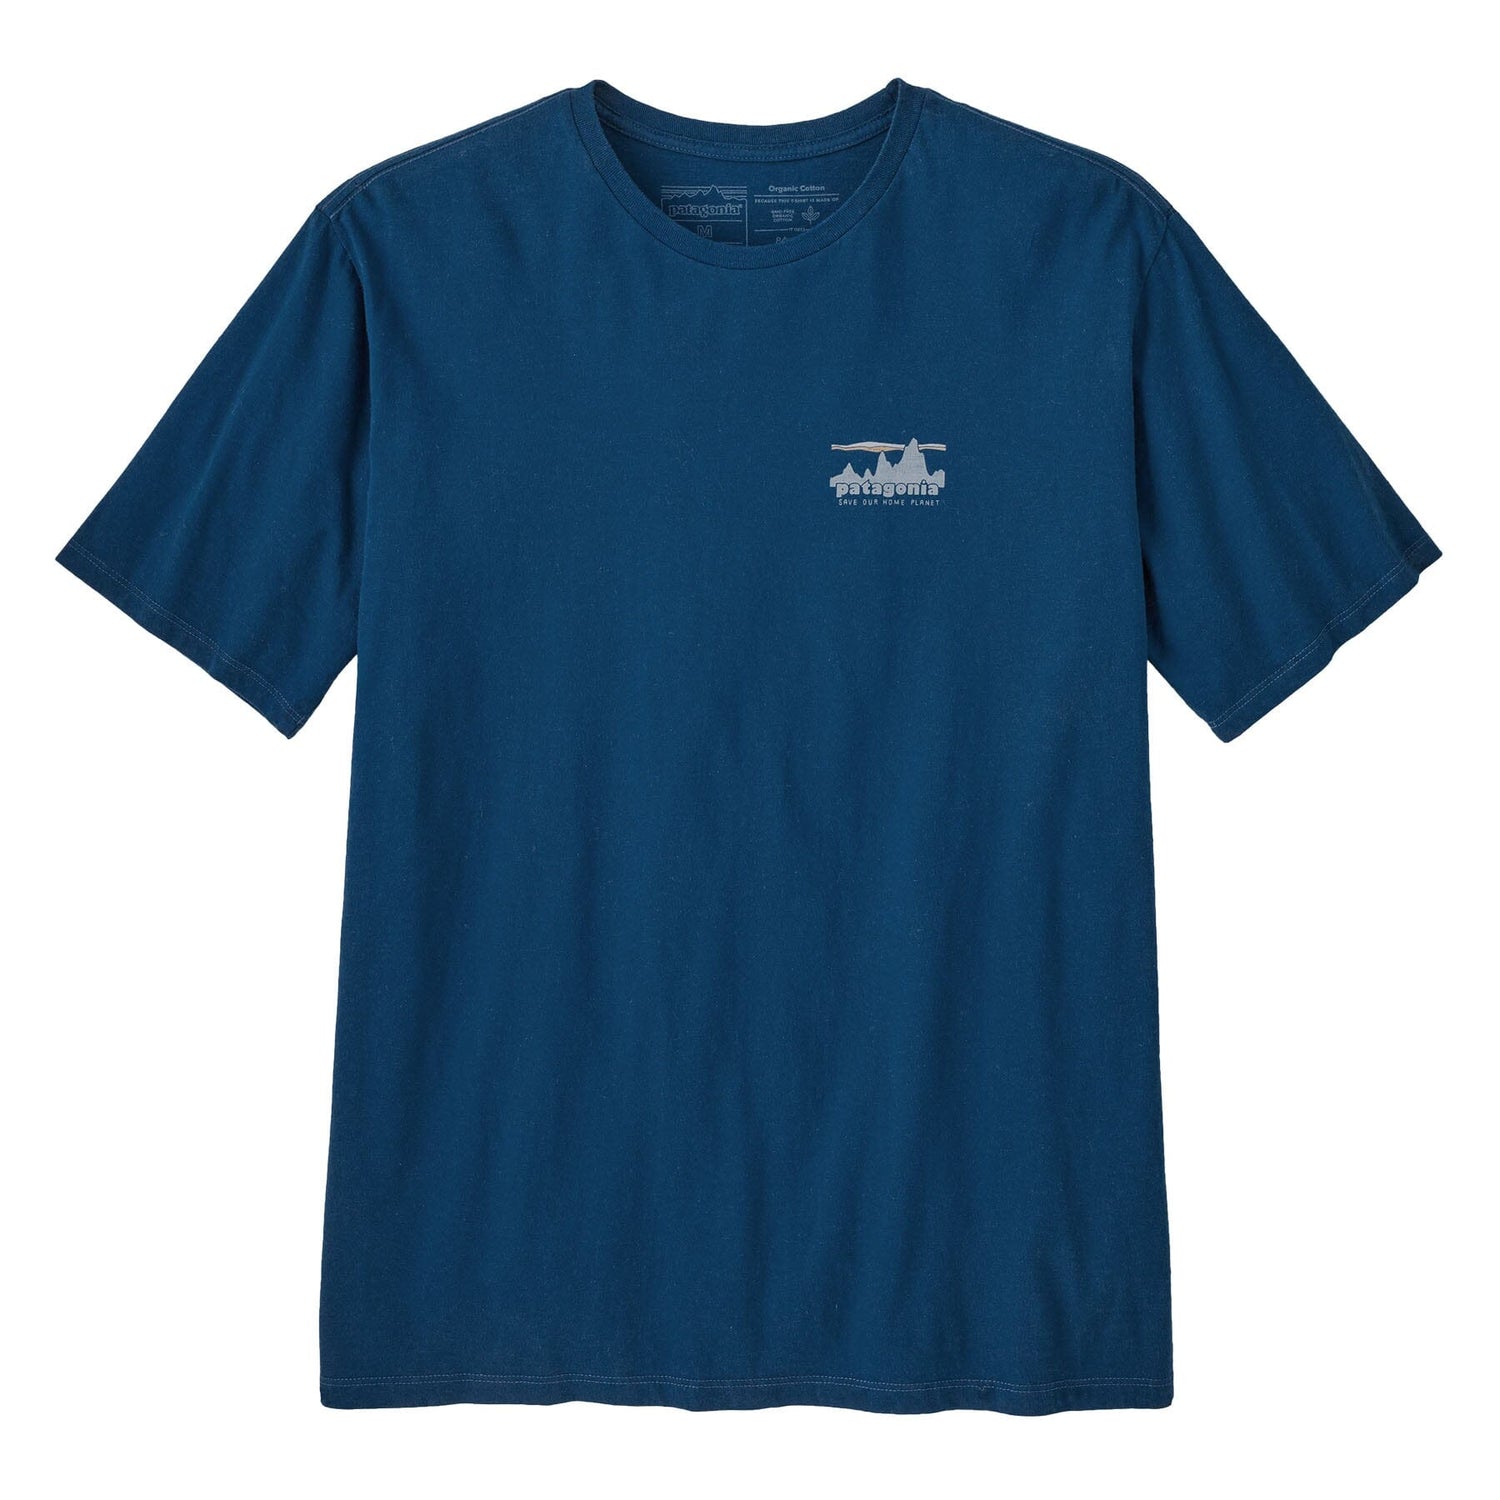 Patagonia - M's '73 Skyline Organic T-Shirt - 100% Organic Cotton - Weekendbee - sustainable sportswear